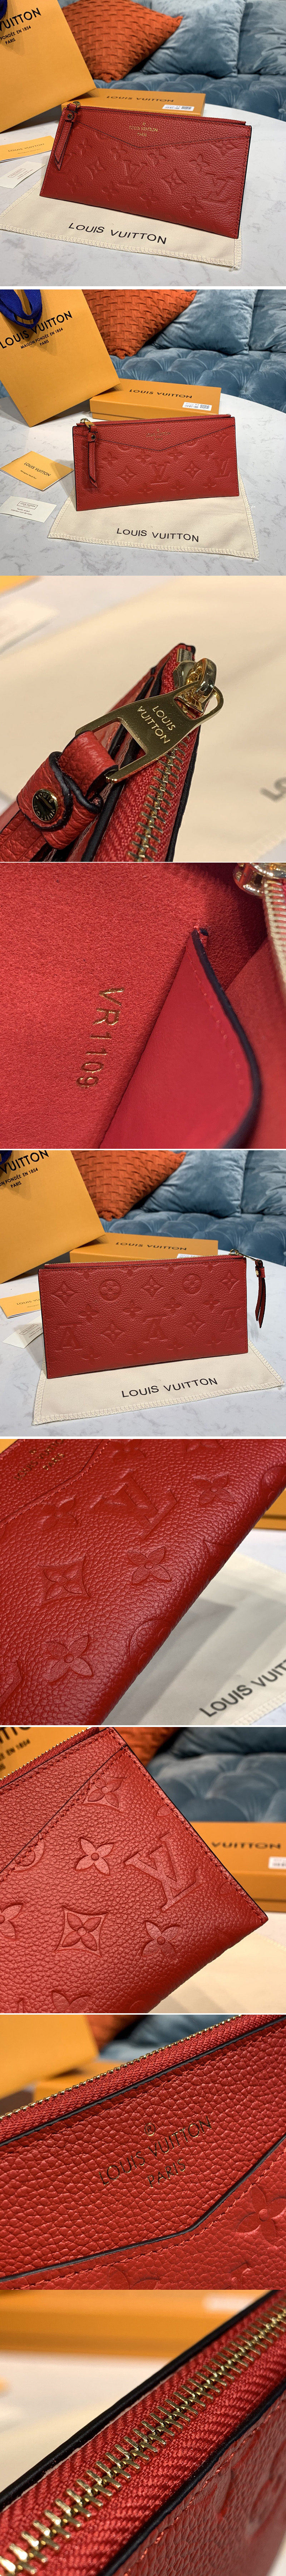 Replica Louis Vuitton M68713 LV Pochette Melanie BB Bag in Red Monogram Empreinte leather